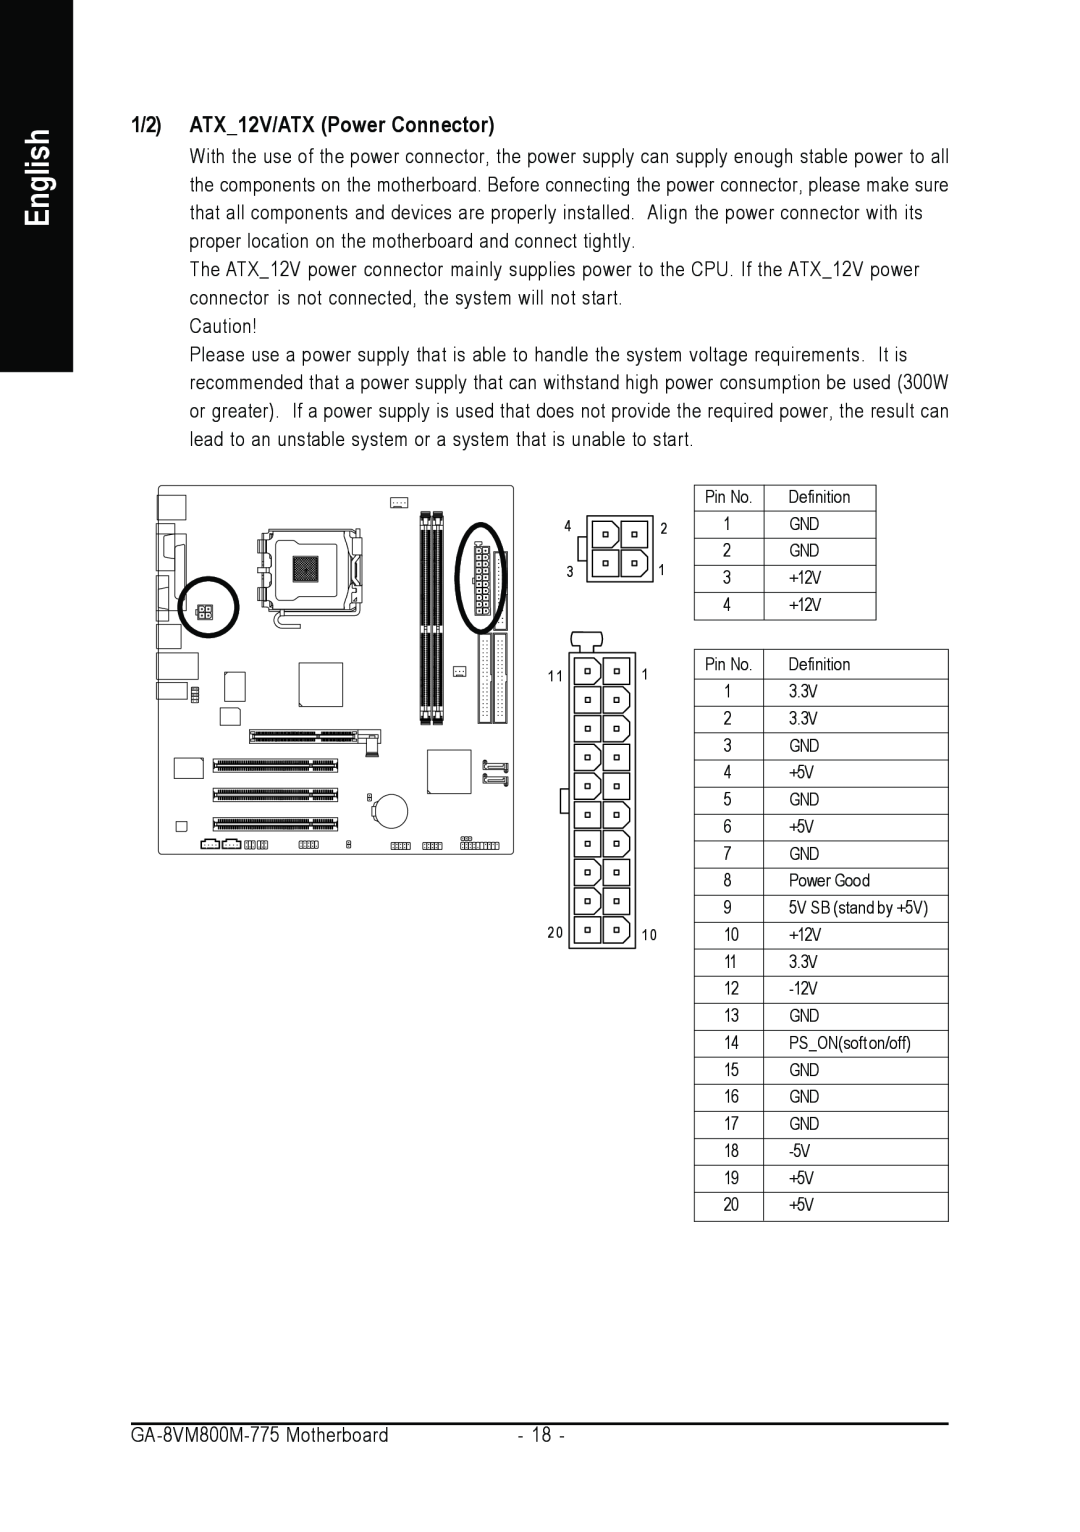 Gigabyte GA-8VM800M-775 user manual 1/2 ATX12V/ATX Power Connector, English, 5V SB stand by +5V, PSONsoft on/off 